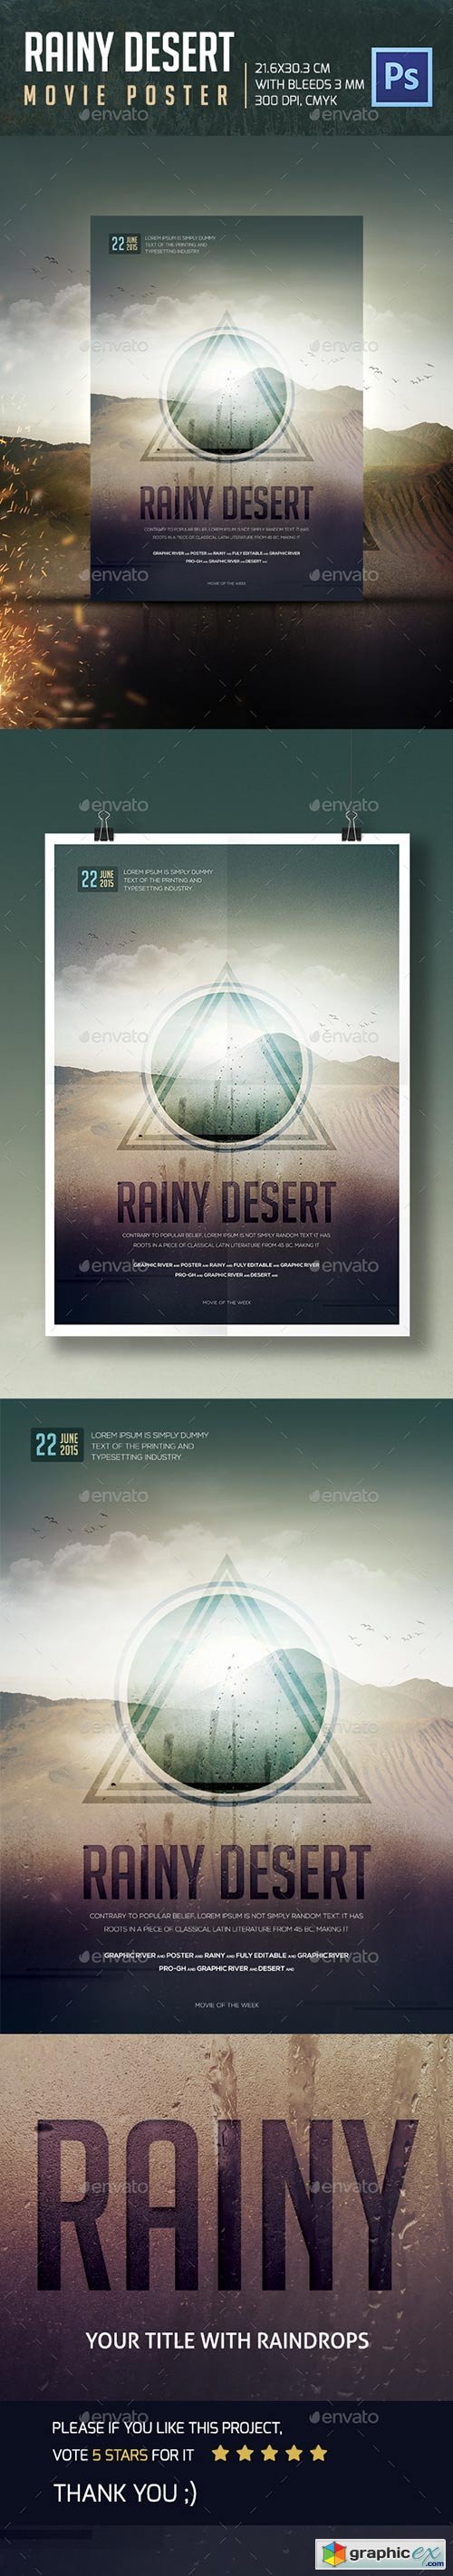 Rainy Desert Movie Poster